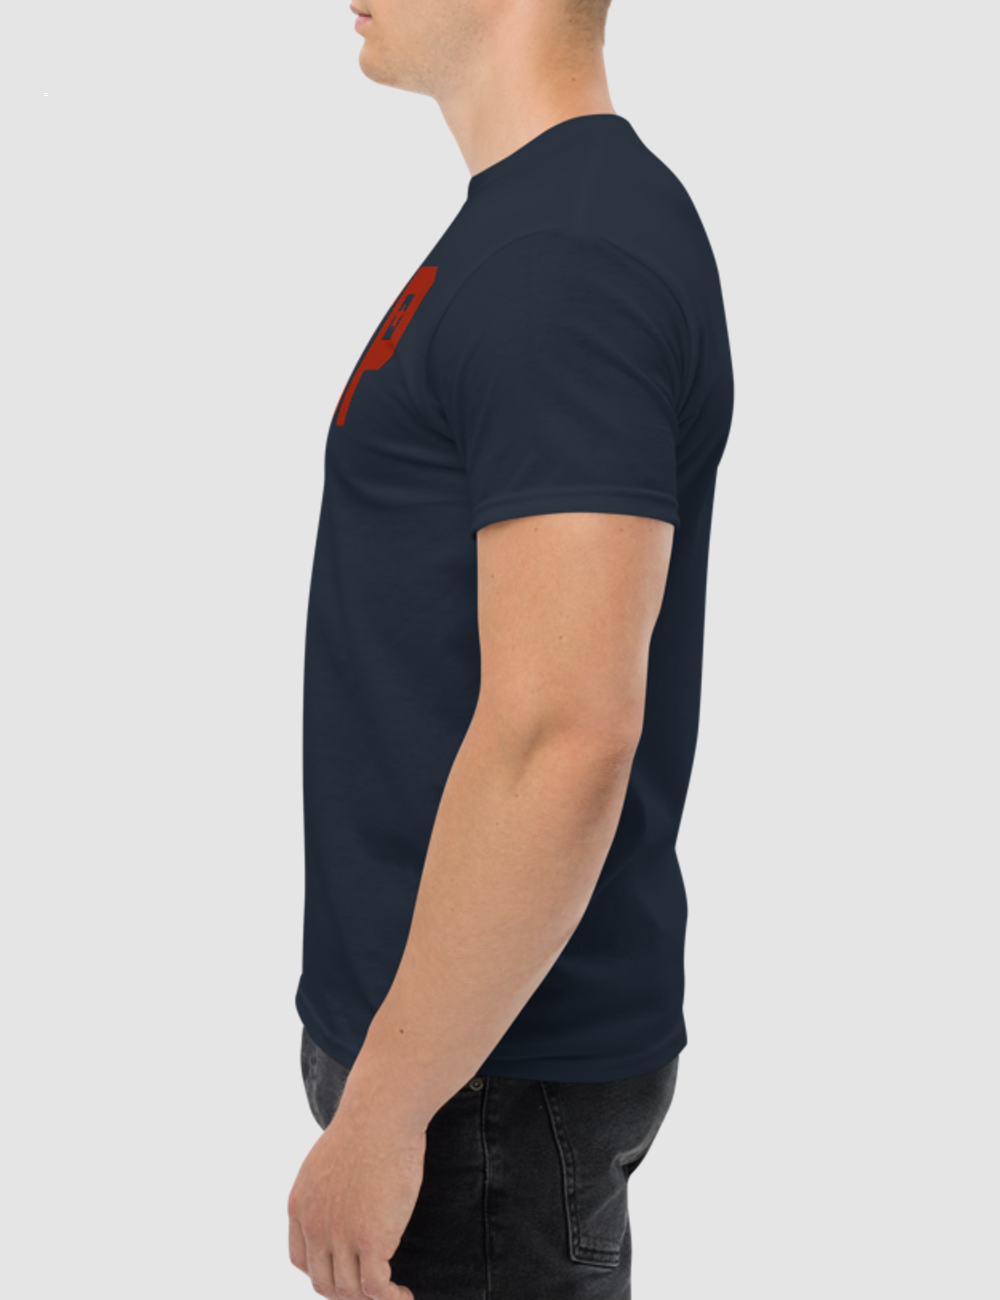 The Soviet Union (CCCP) Men's Classic T-Shirt OniTakai